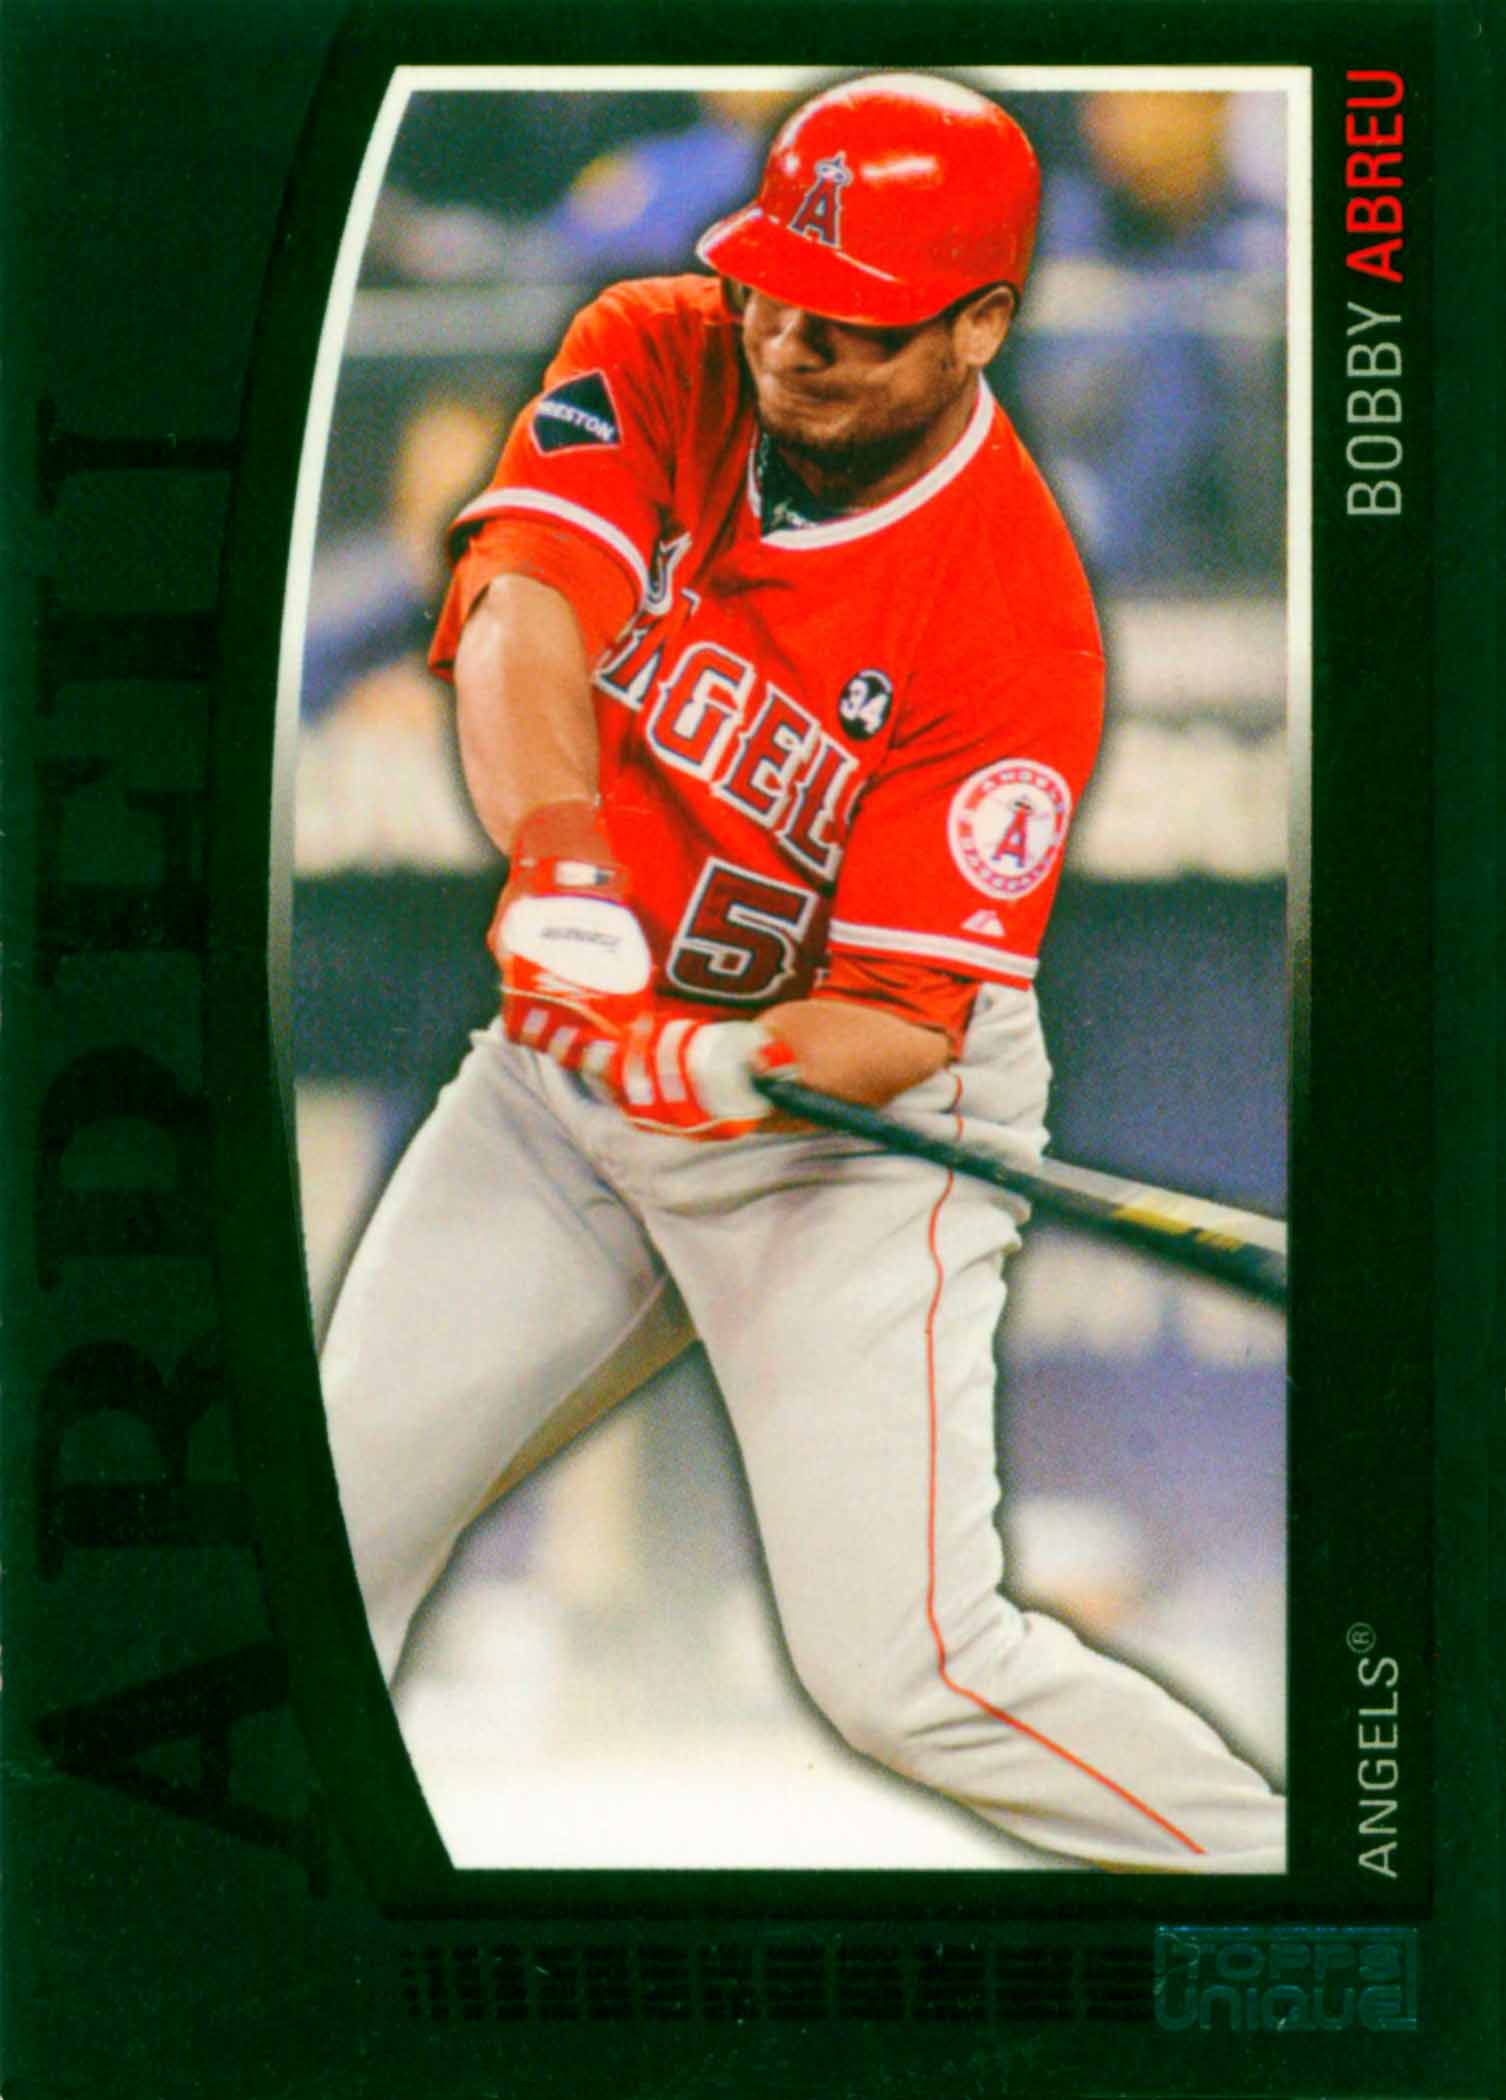 2,770 Bobby Abreu” Baseball Stock Photos, High-Res Pictures, and